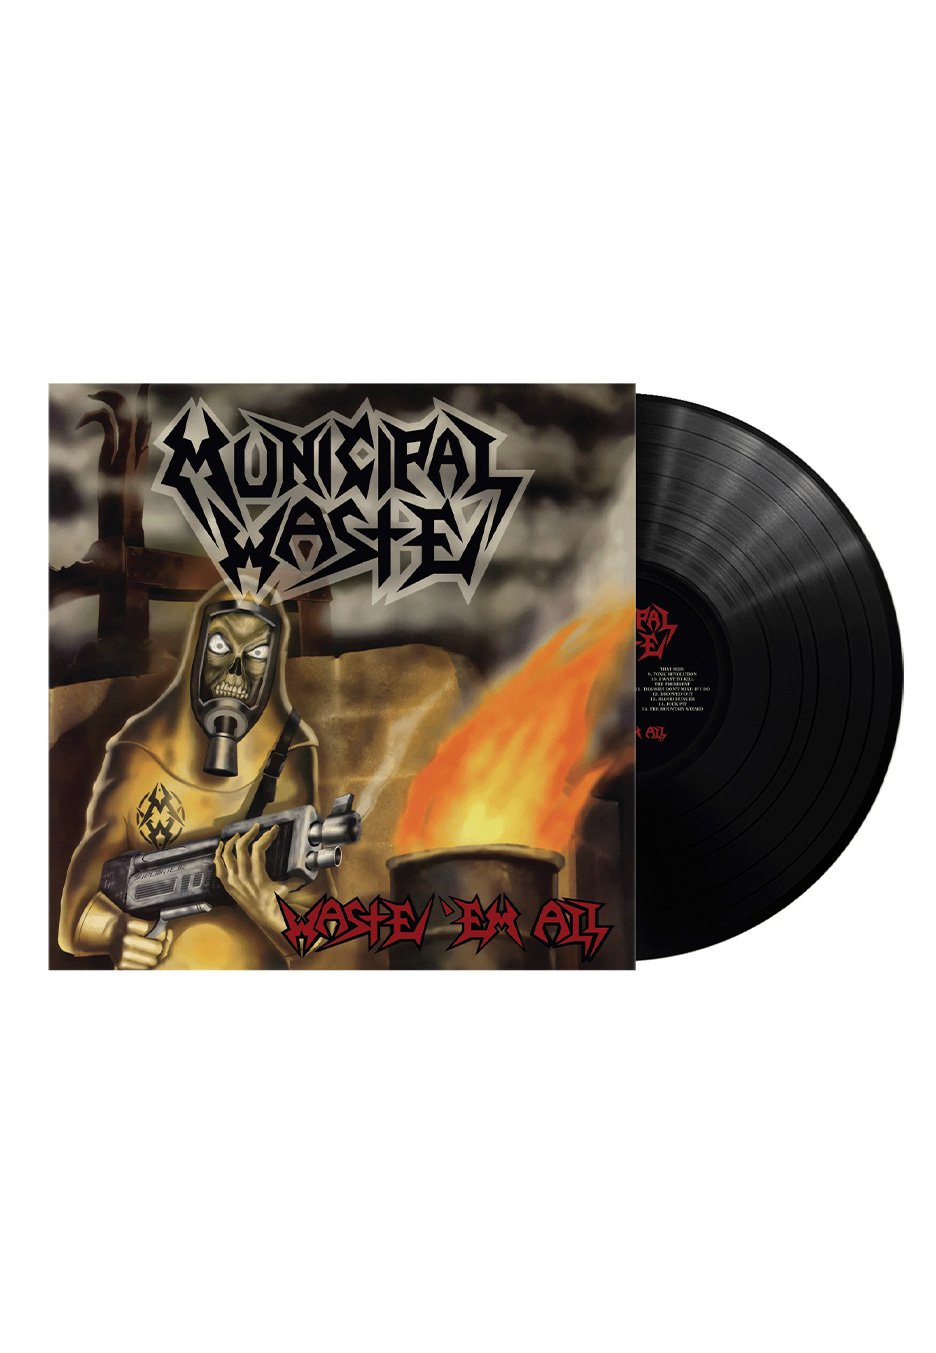 Municipal Waste - Waste 'Em All (Remastered) - Vinyl